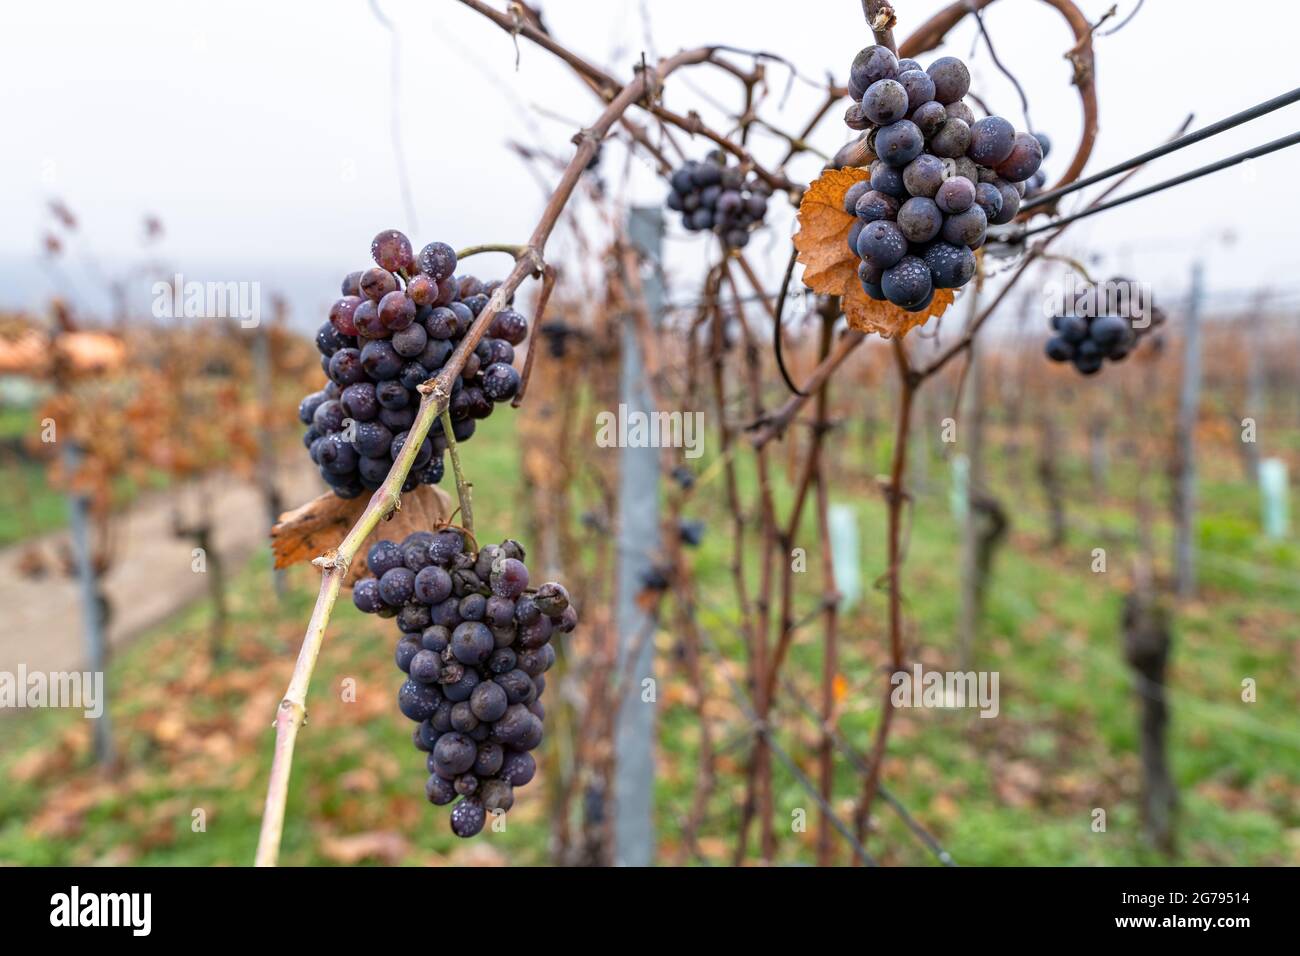 Europe, Germany, Baden-Wuerttemberg, Neckar Valley, Mundelsheim, grapes in autumn Stock Photo